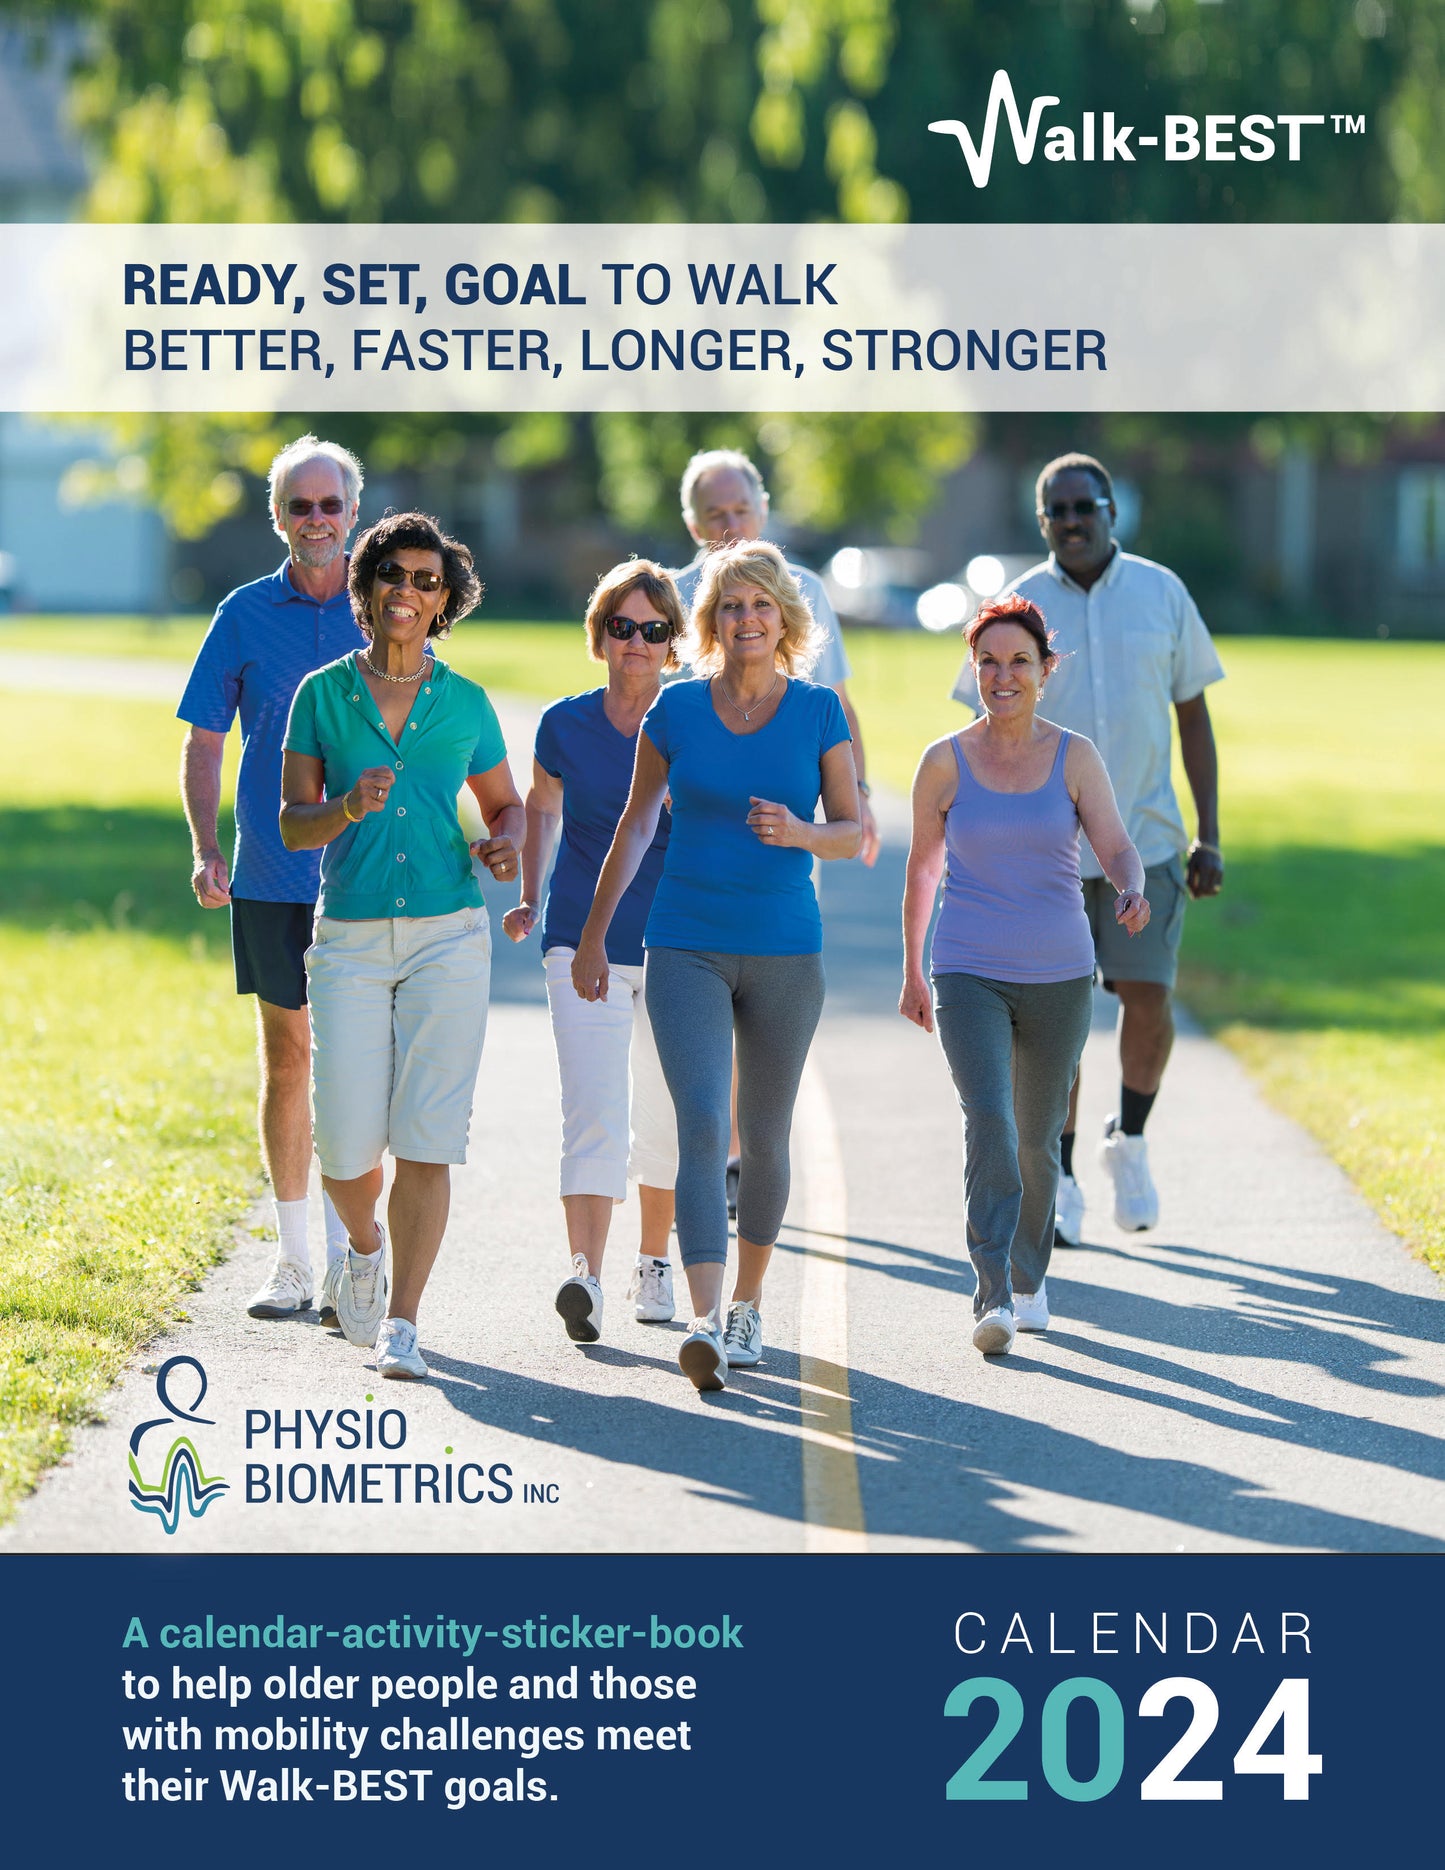 Walk-BEST Goal Setting 2024 Calendar (Engish only)